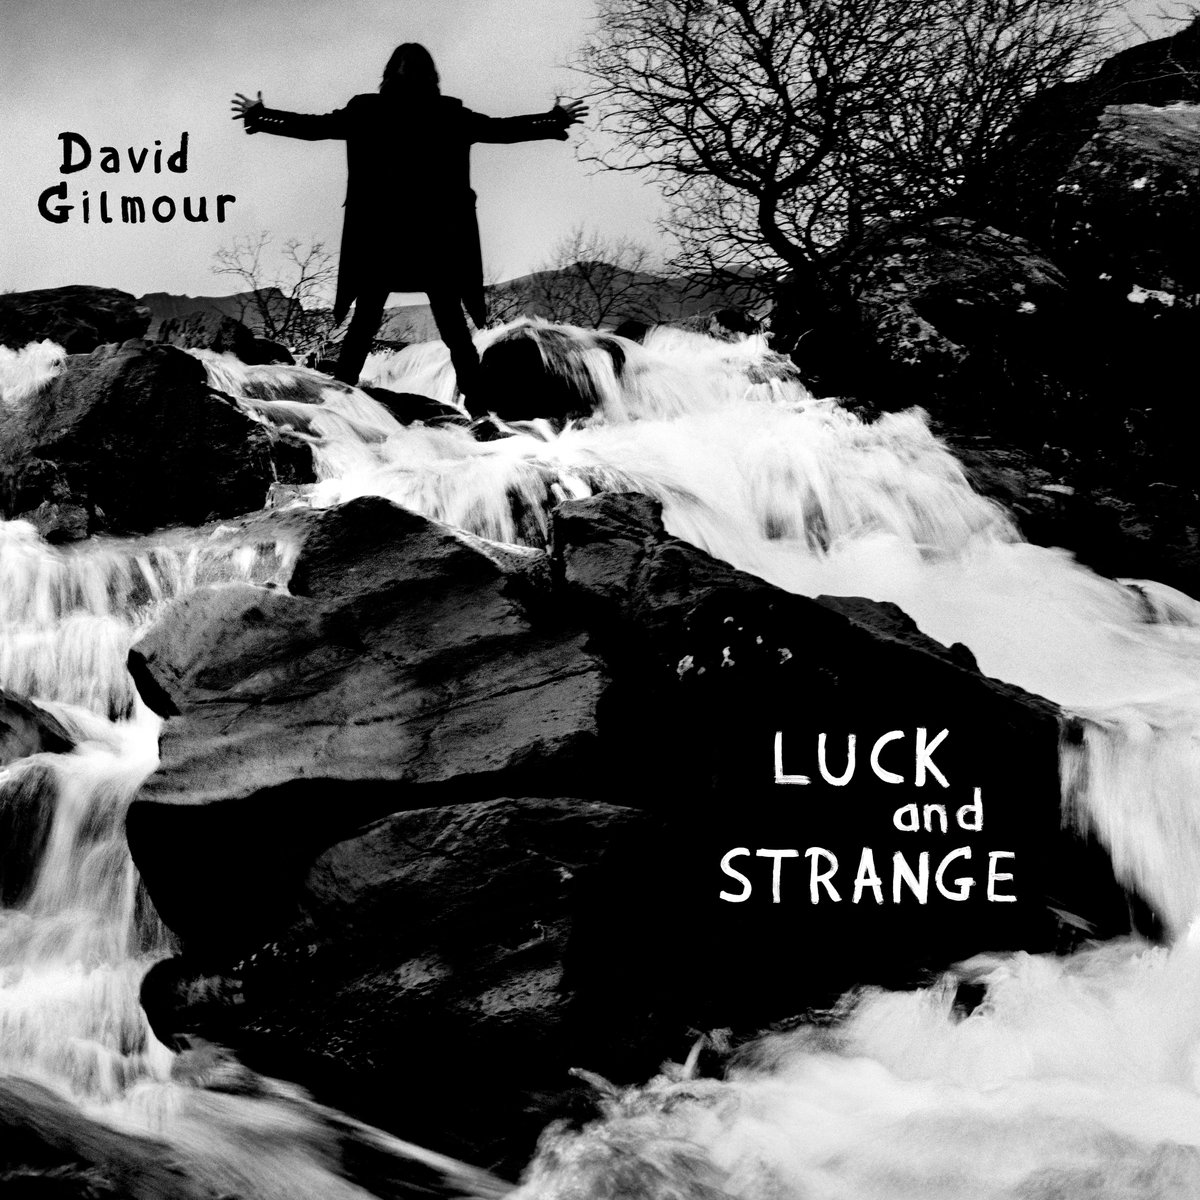 The new album, Luck and Strange, out 6th September. Pre-order now on vinyl, CD, Blu-ray & digital from davidgilmour.lnk.to/LuckandStrange